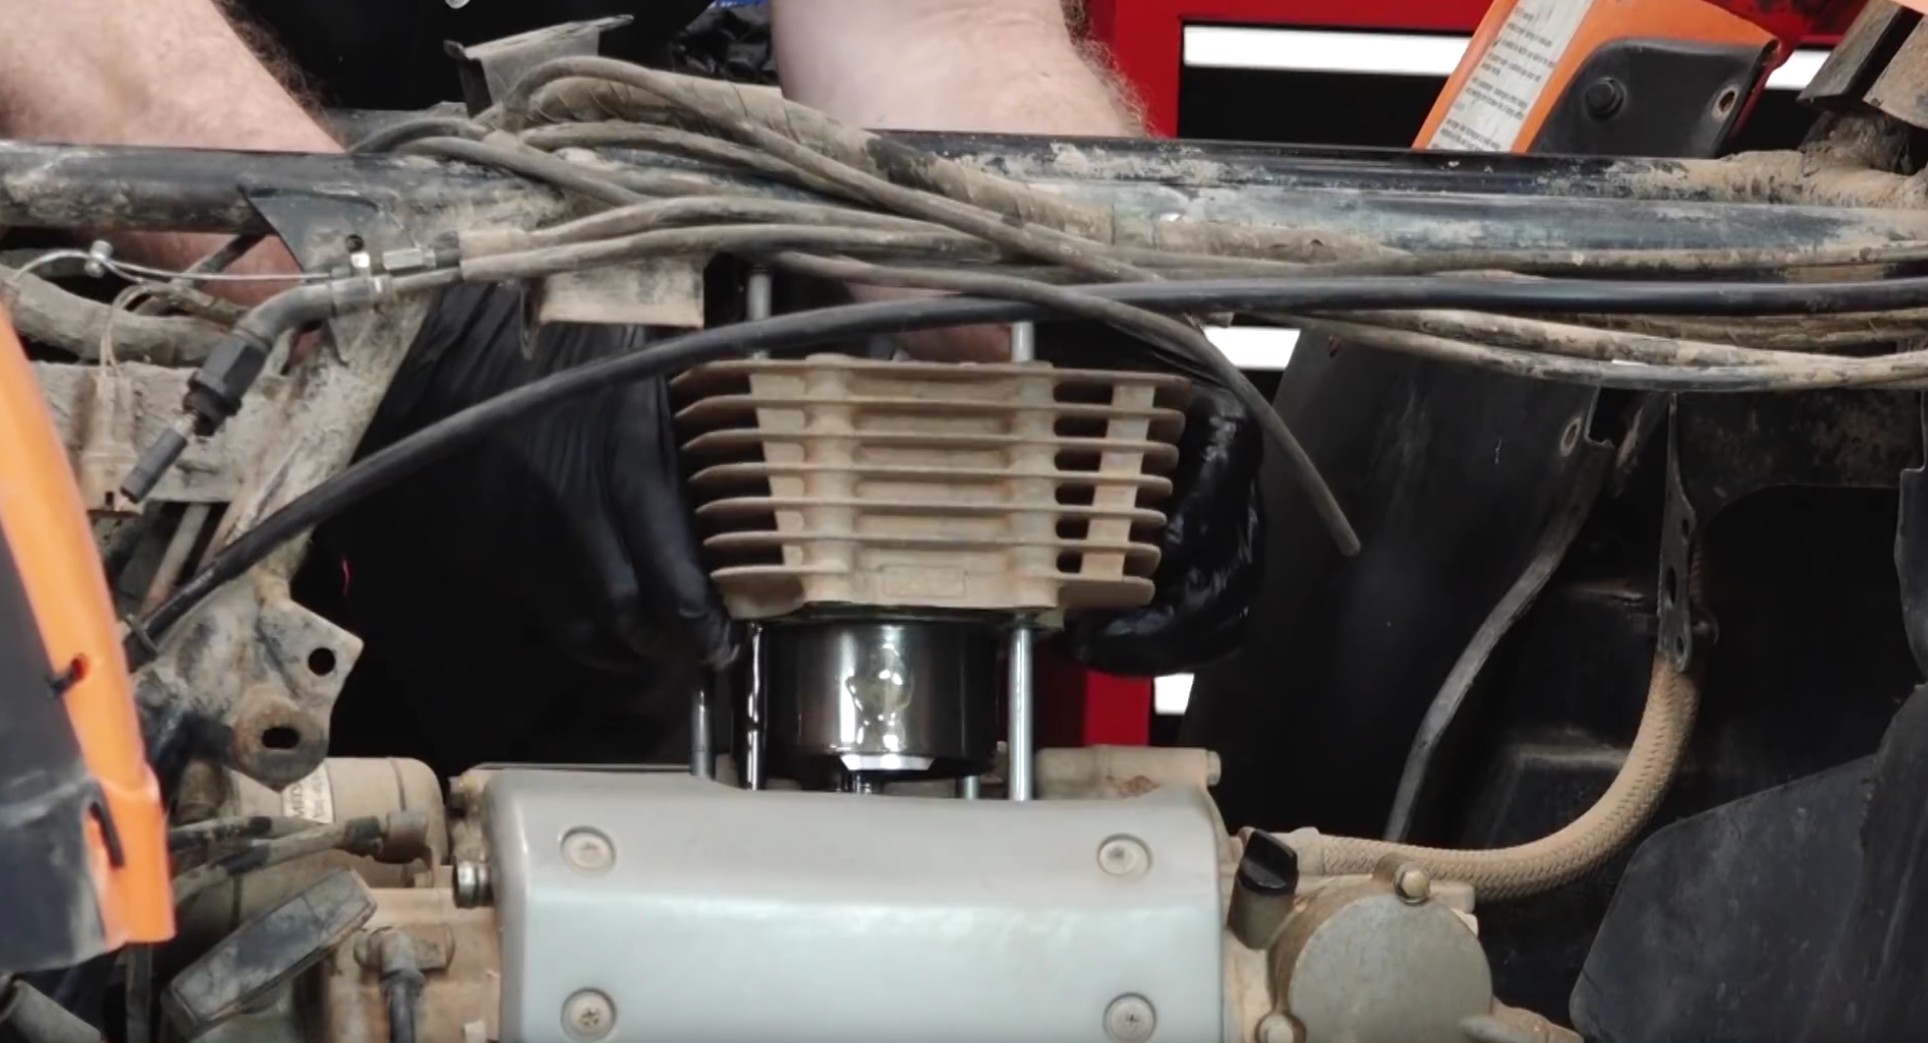 Honda TRX350 ATV engine teardown